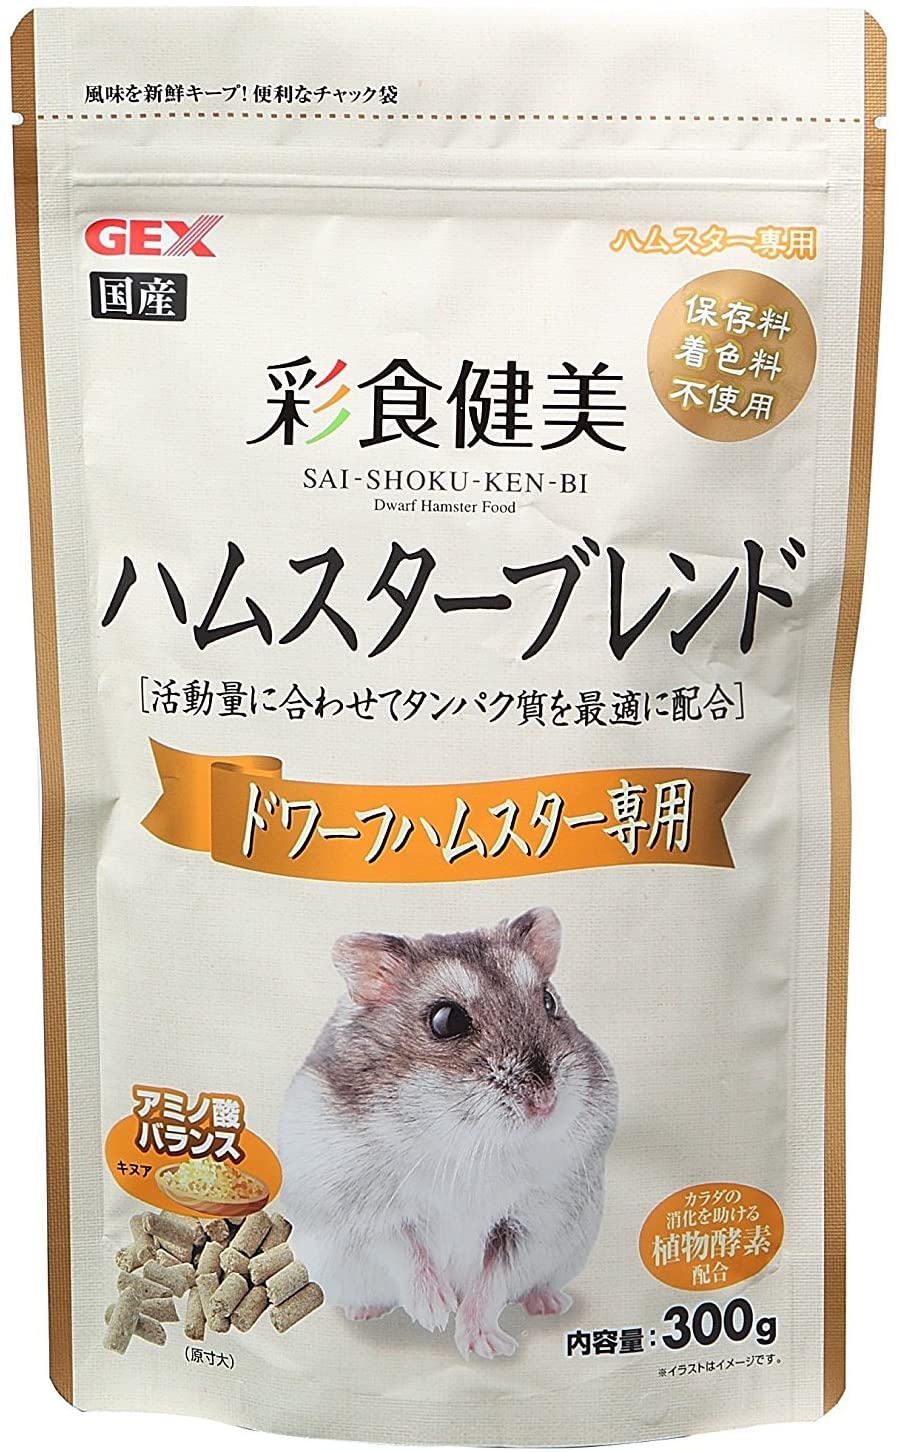 Gex Saishoku Kenbi Dwarf Hamster Food 300g